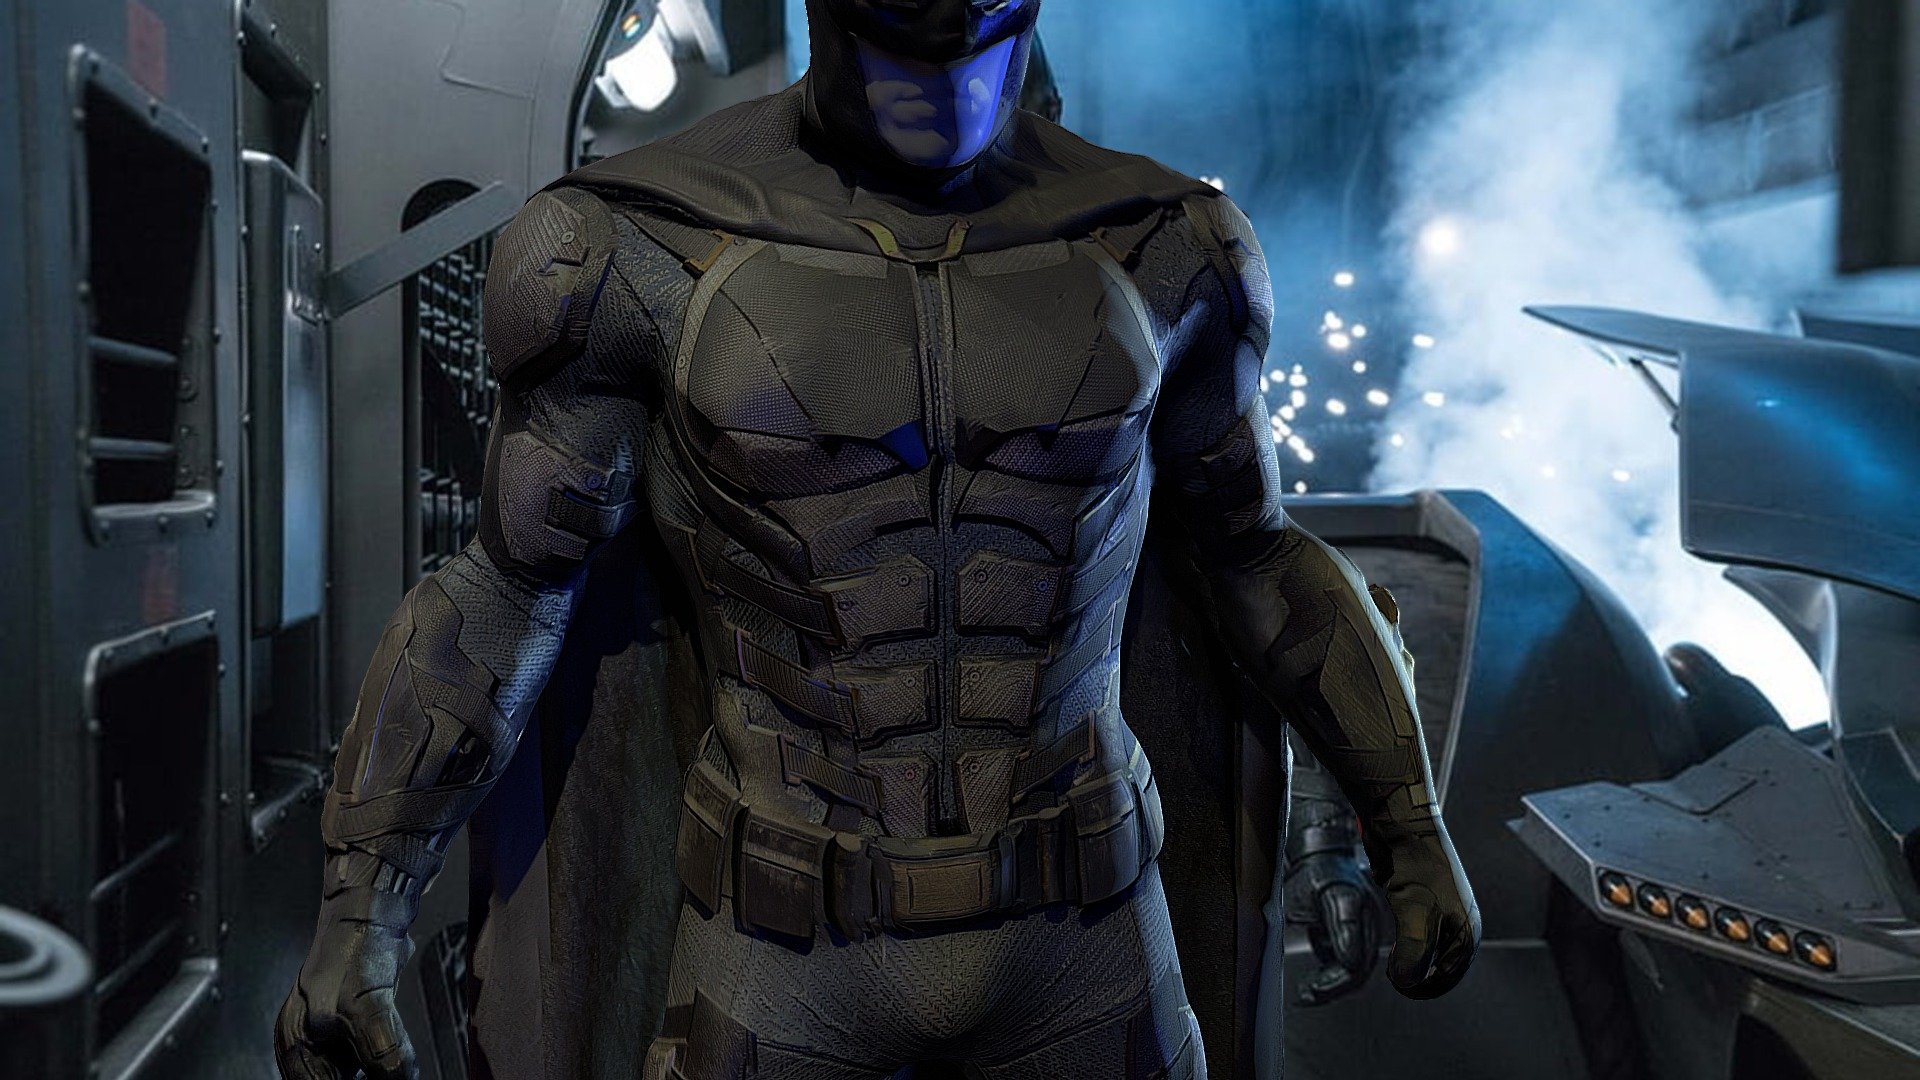 Batman Justice League Tactical Screen Worn Buy Royalty Free 3d Model By Bad Beetle 7455